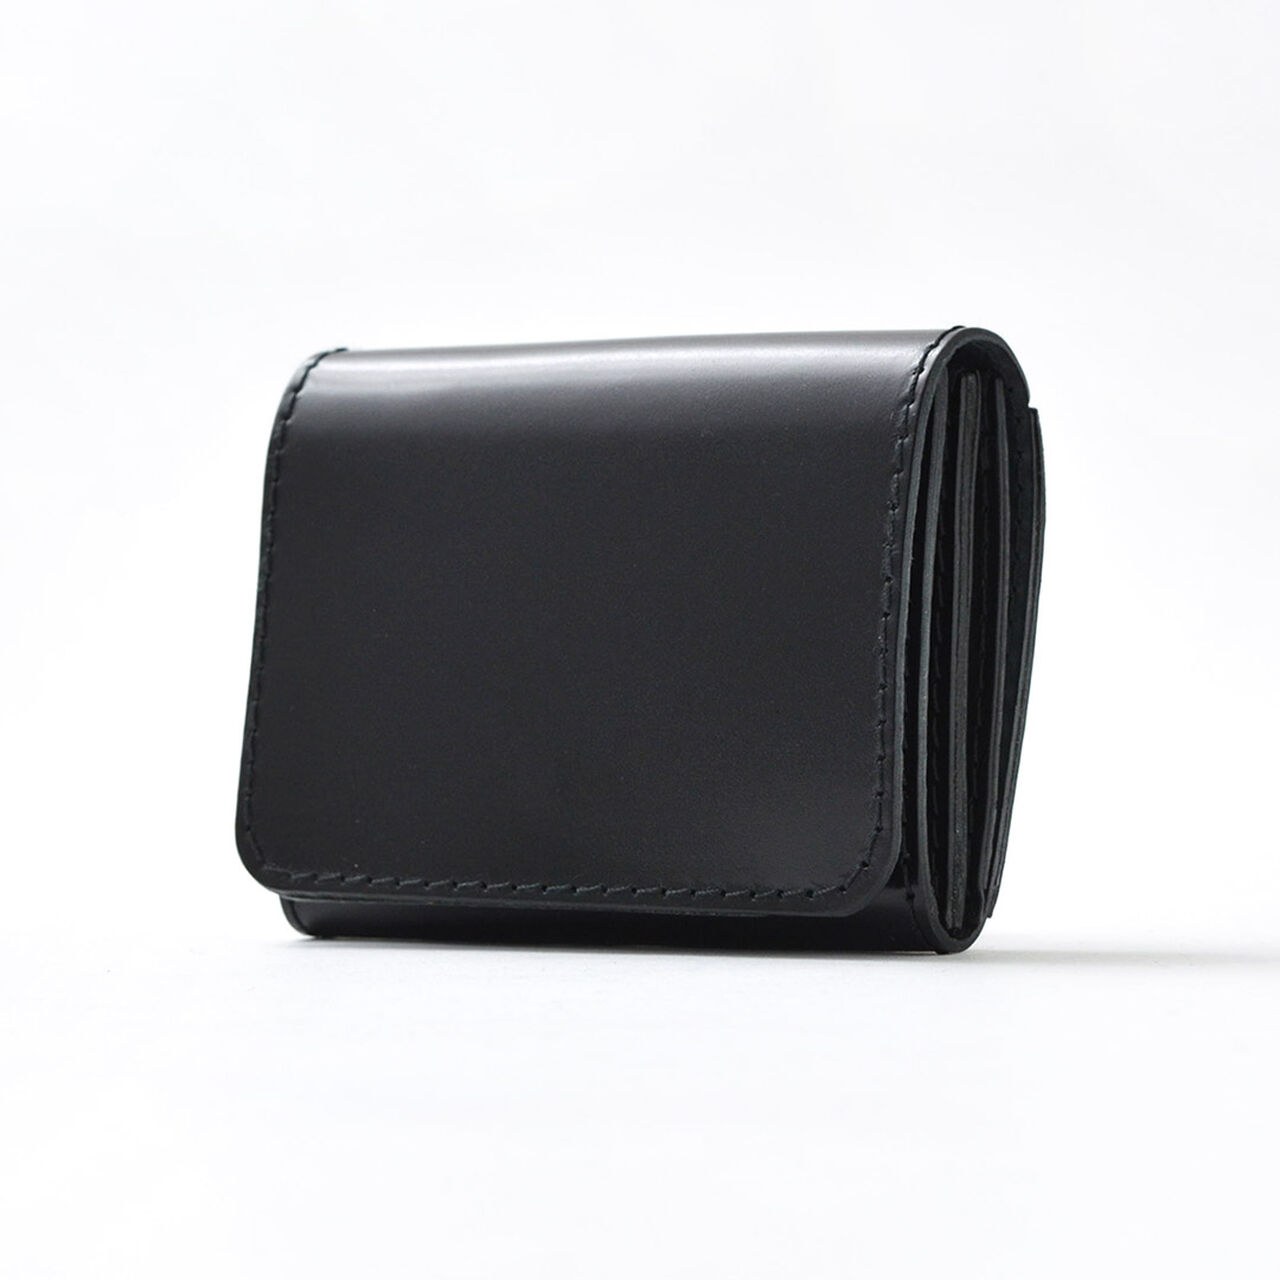 Cordovan compact wallet,Black, large image number 0